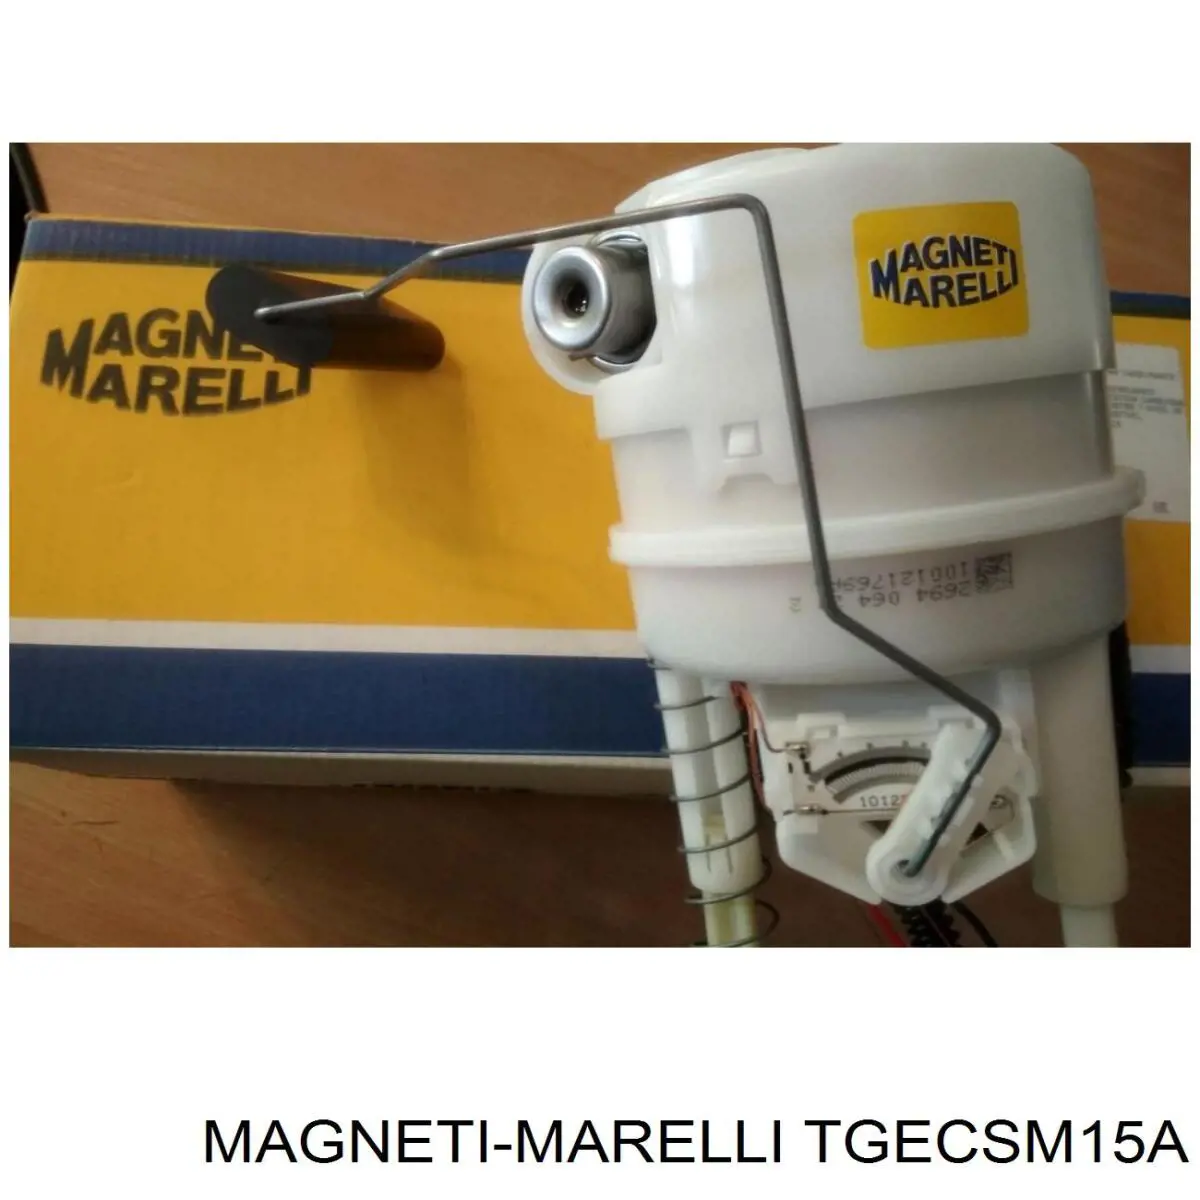 TGECSM15A Magneti Marelli motor del limpiaparabrisas del parabrisas